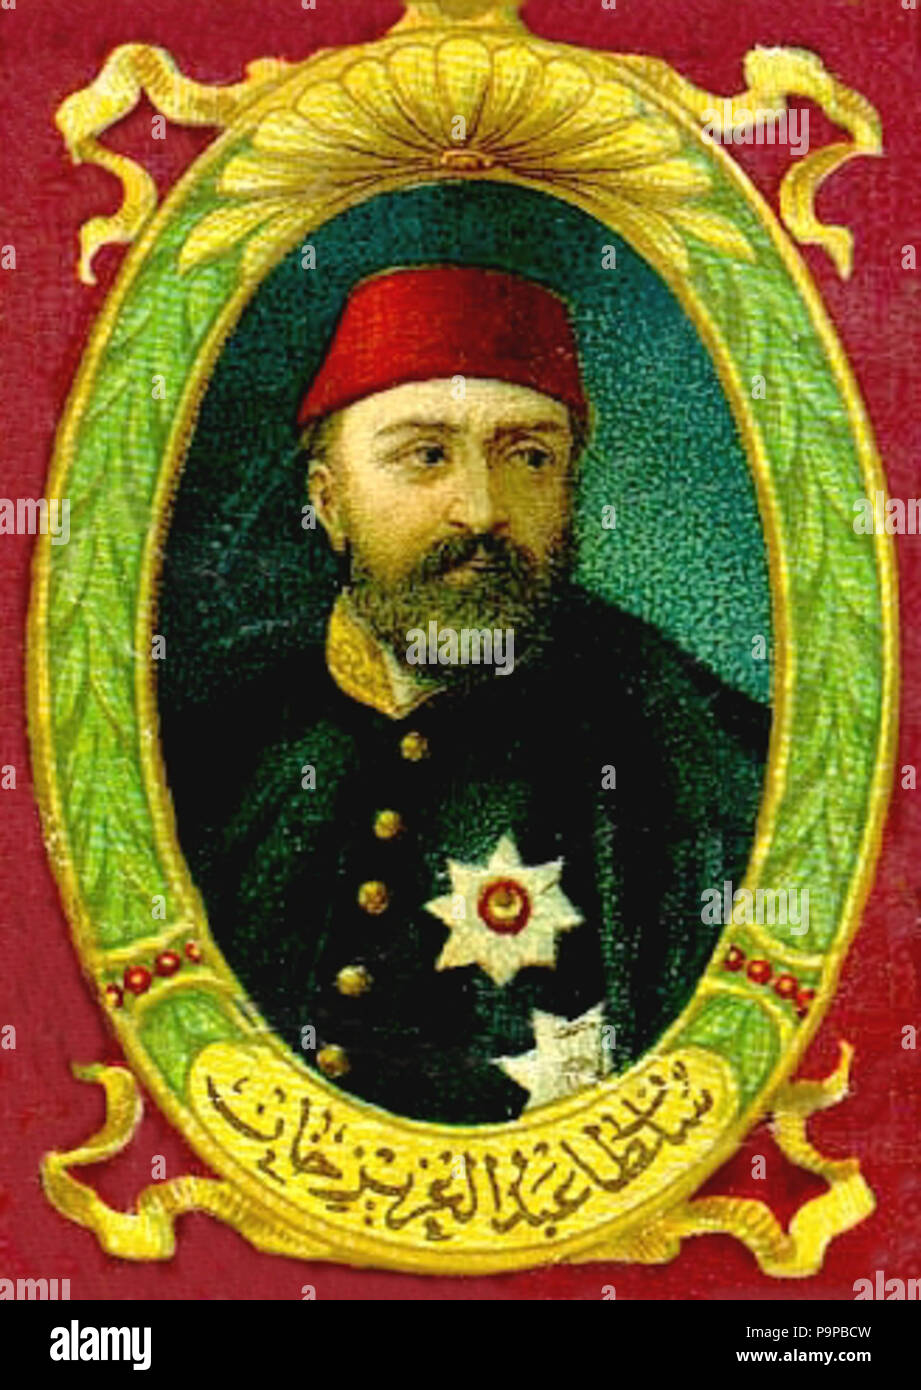 ABDUL AZIZ (1830-1876). Sultan of Turkey. Deposed and 